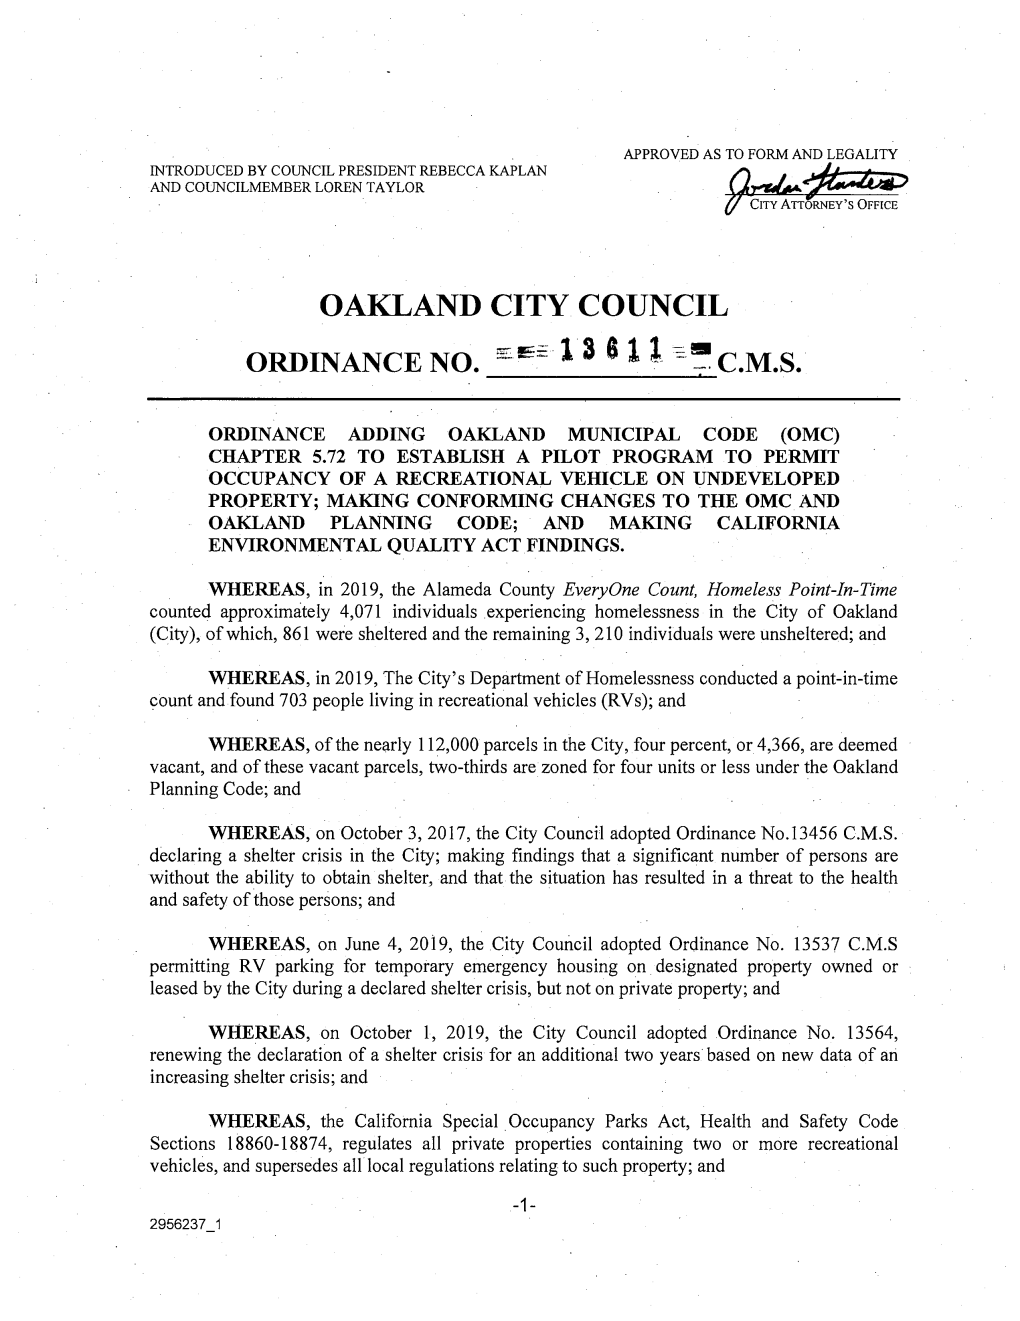 Oakland City Council Ordinance No. E 13 011